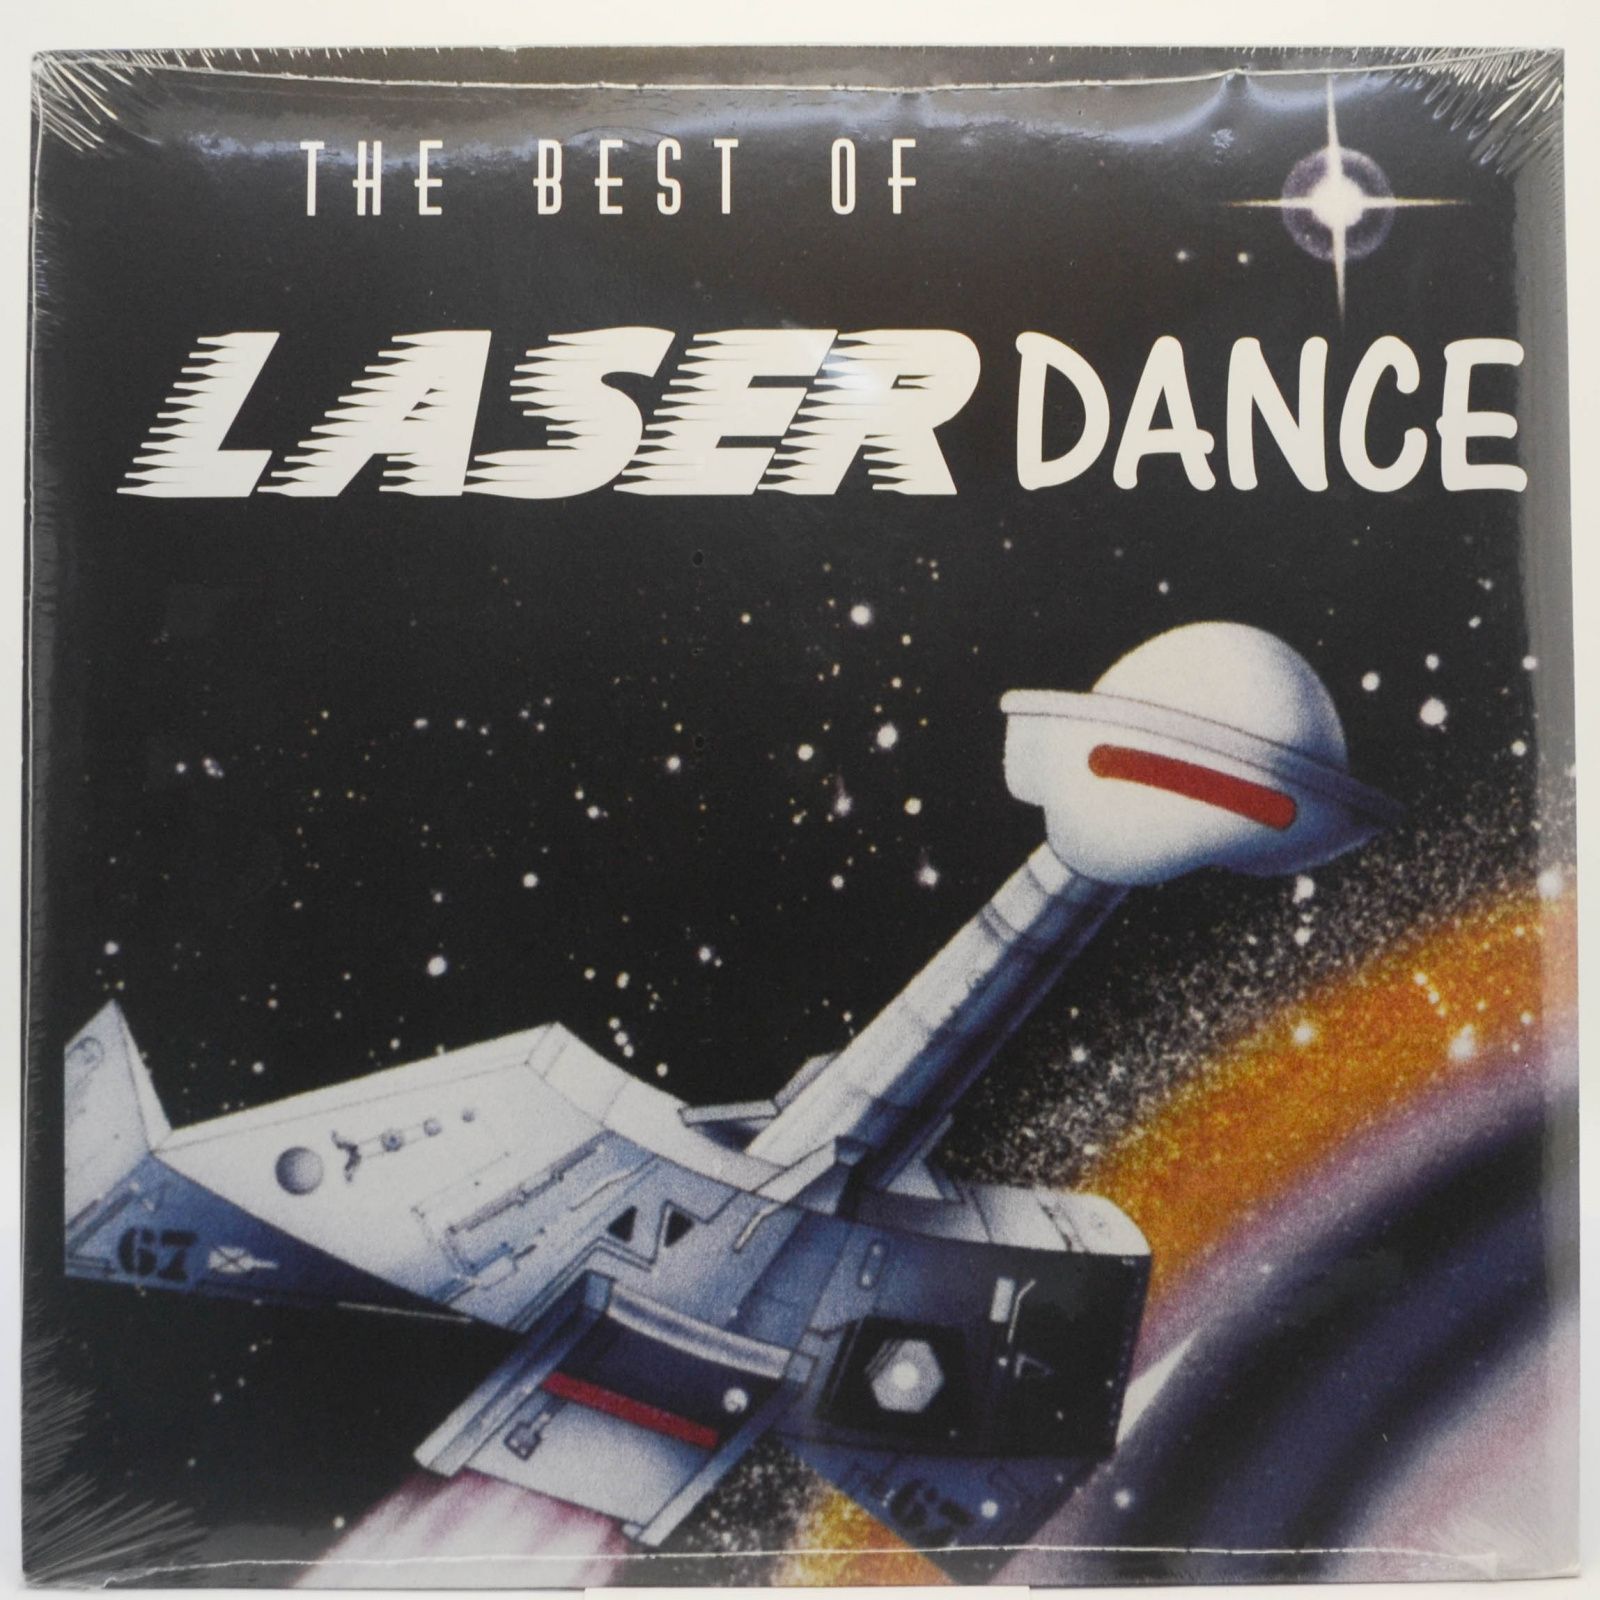 Laserdance — The Best Of Laserdance, 1992